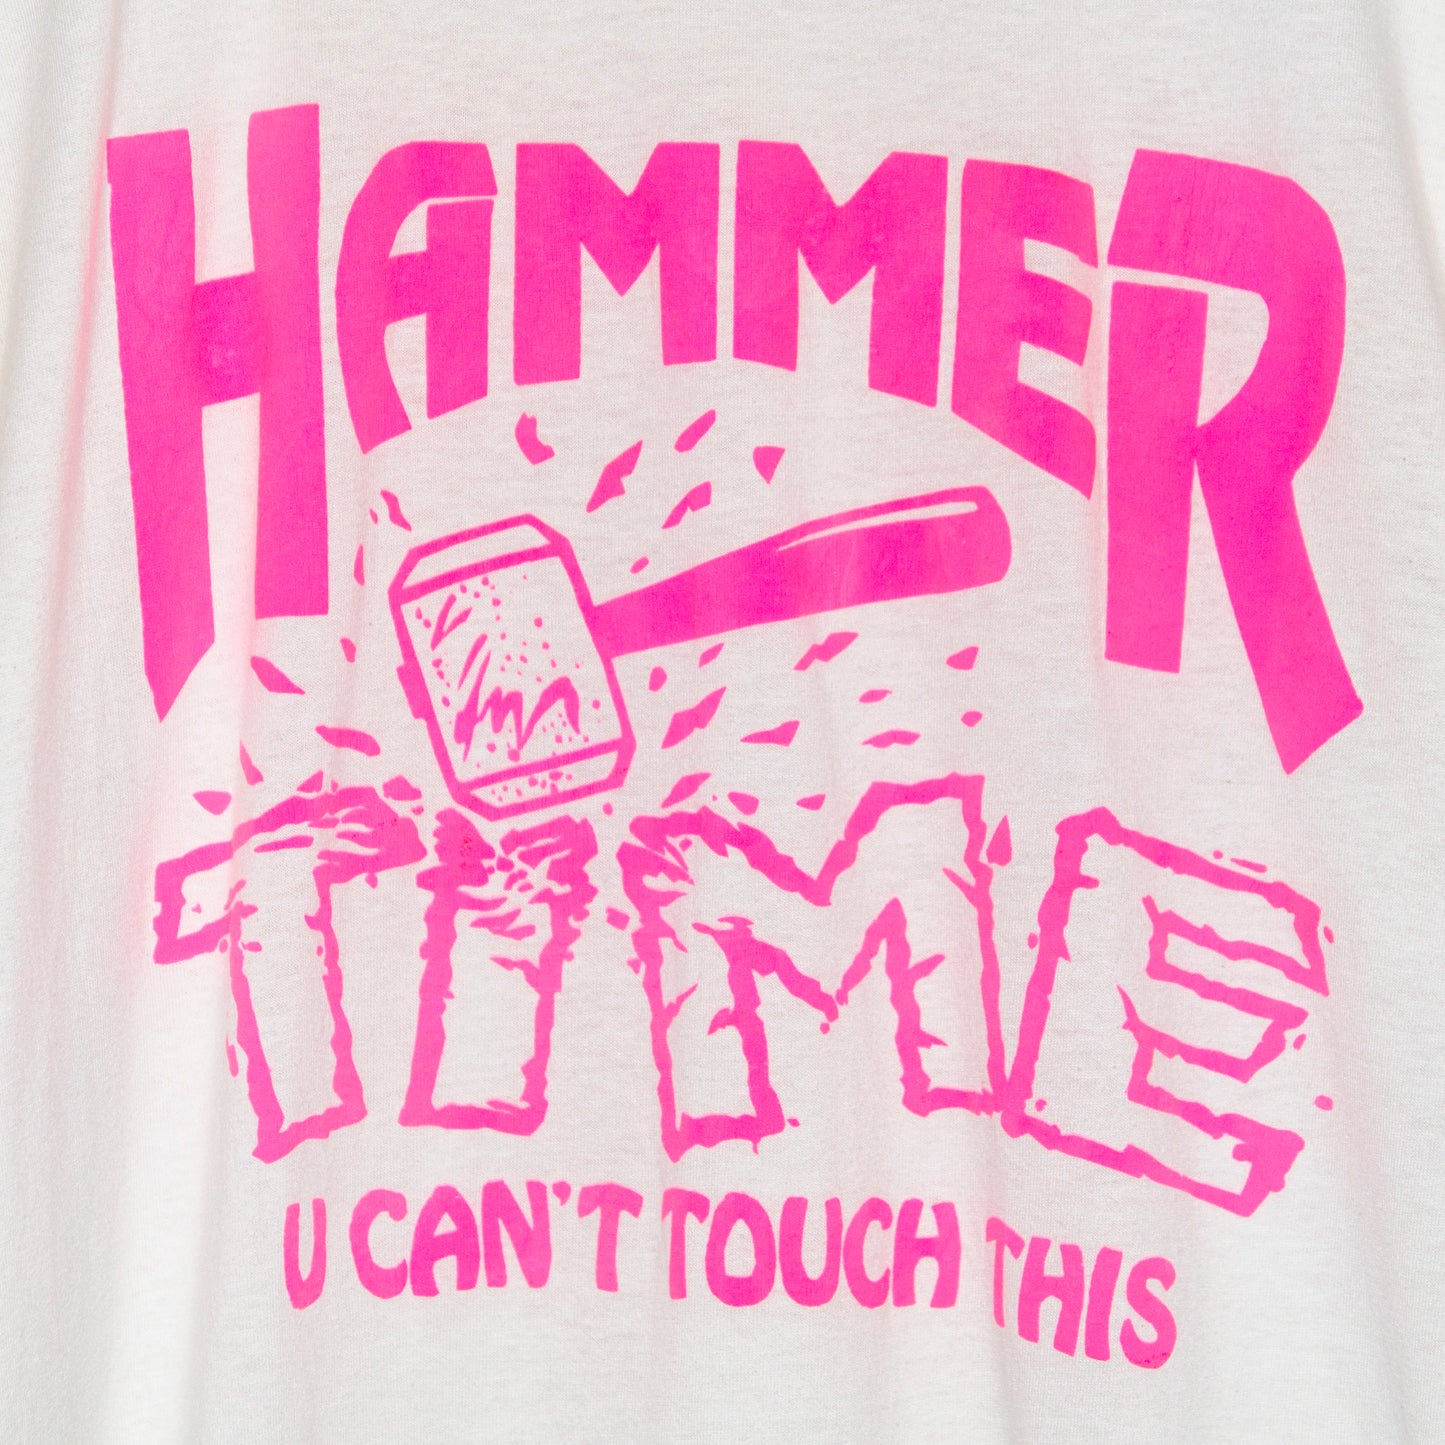 Early 90's MC Hammer 'Hammer Time' T-Shirt XL